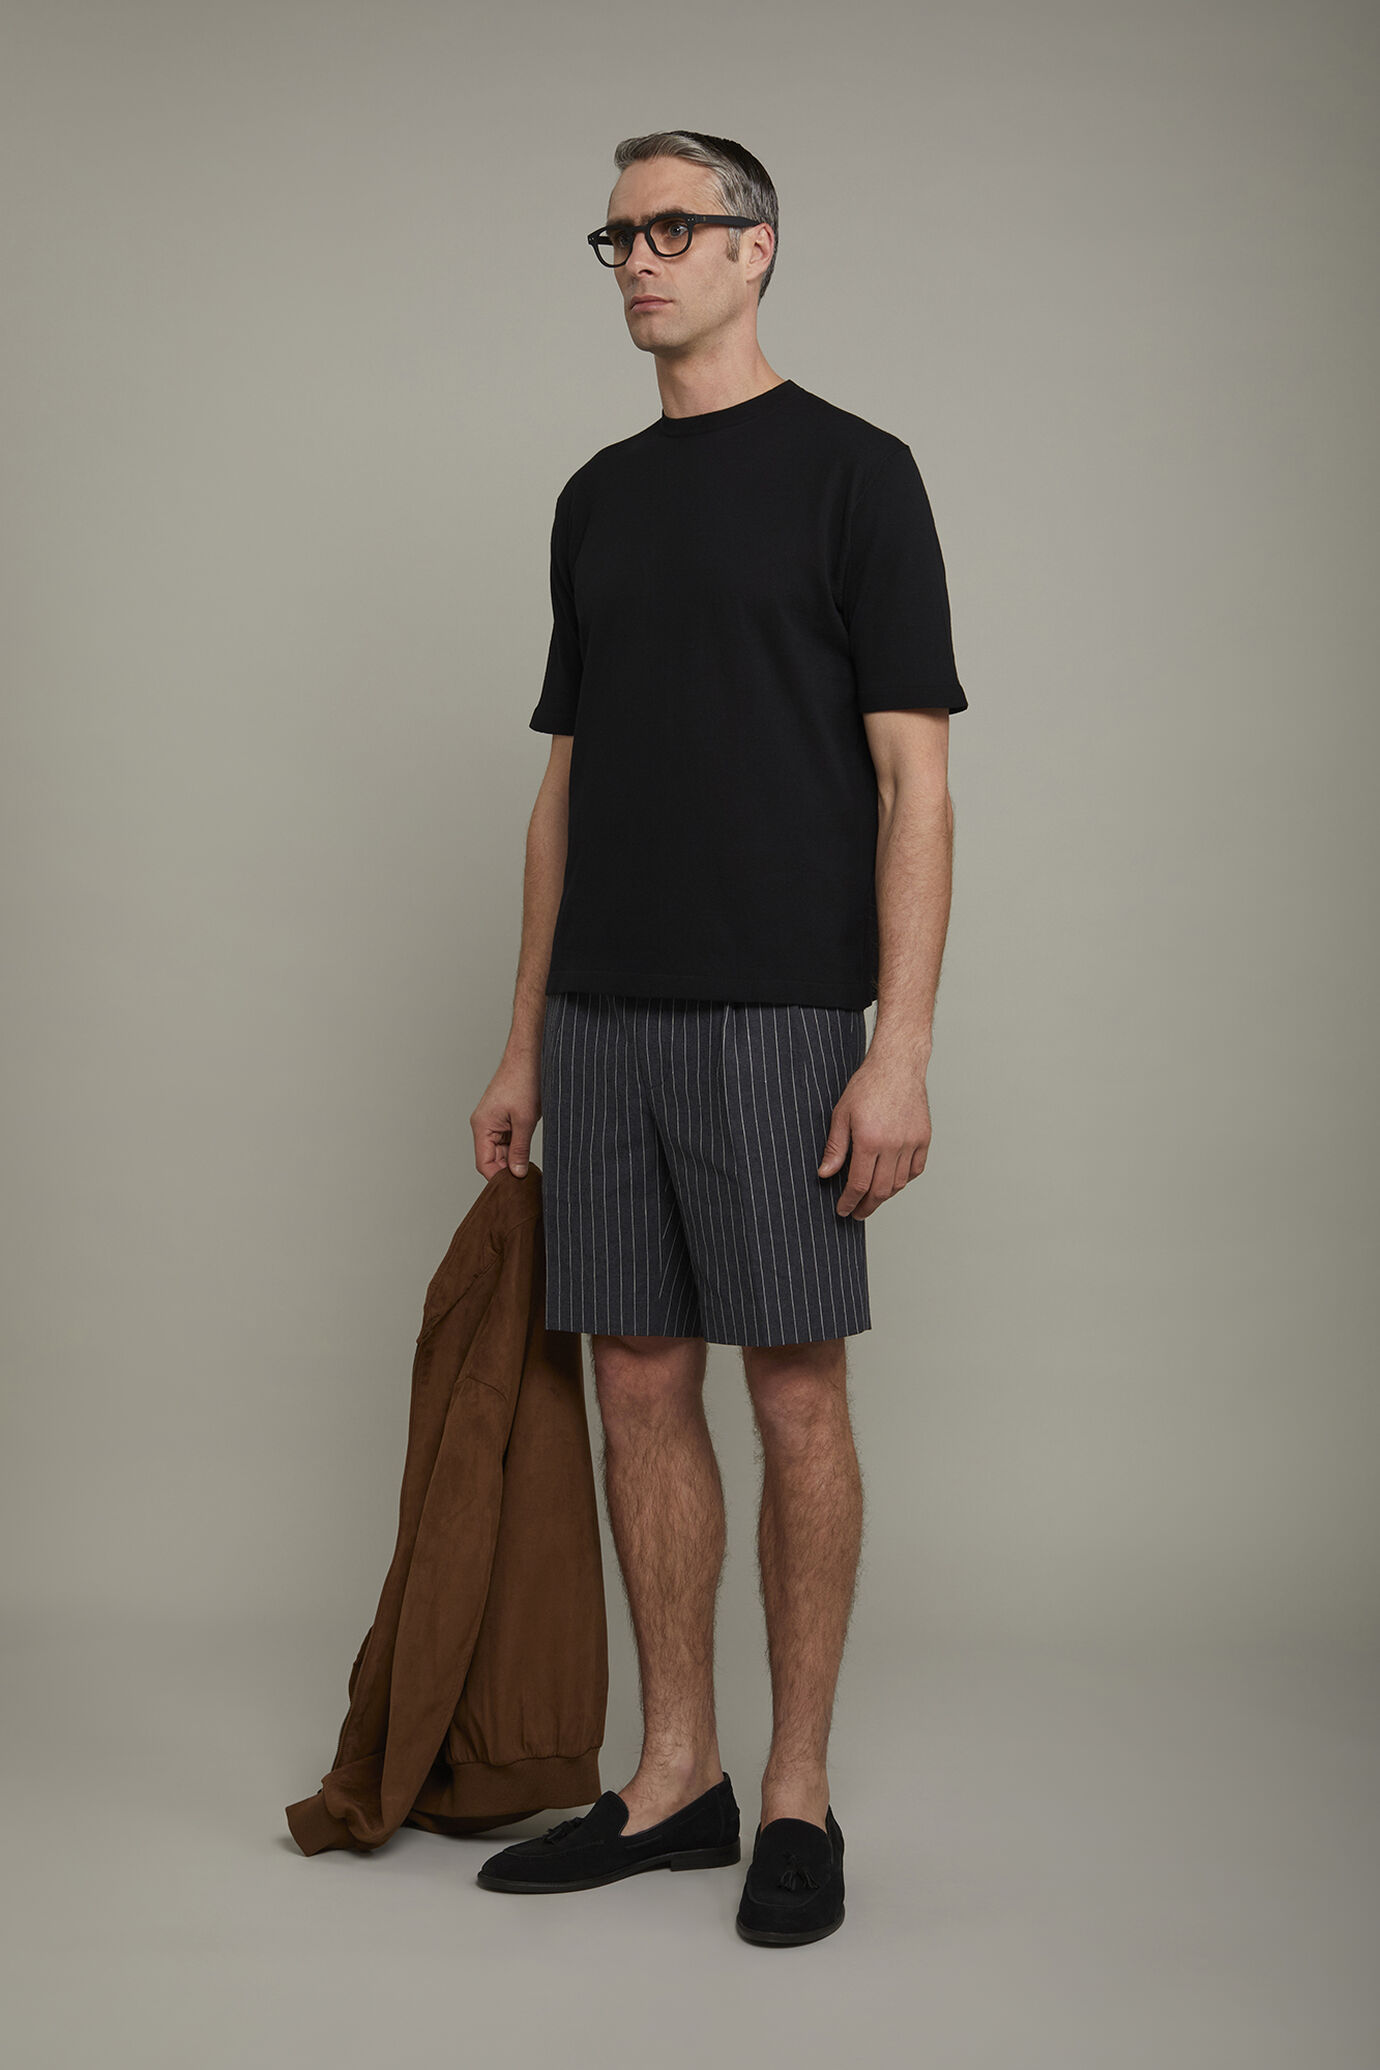 Men's knitted t-shirt 100% cotton short-sleeved regular fit image number 1